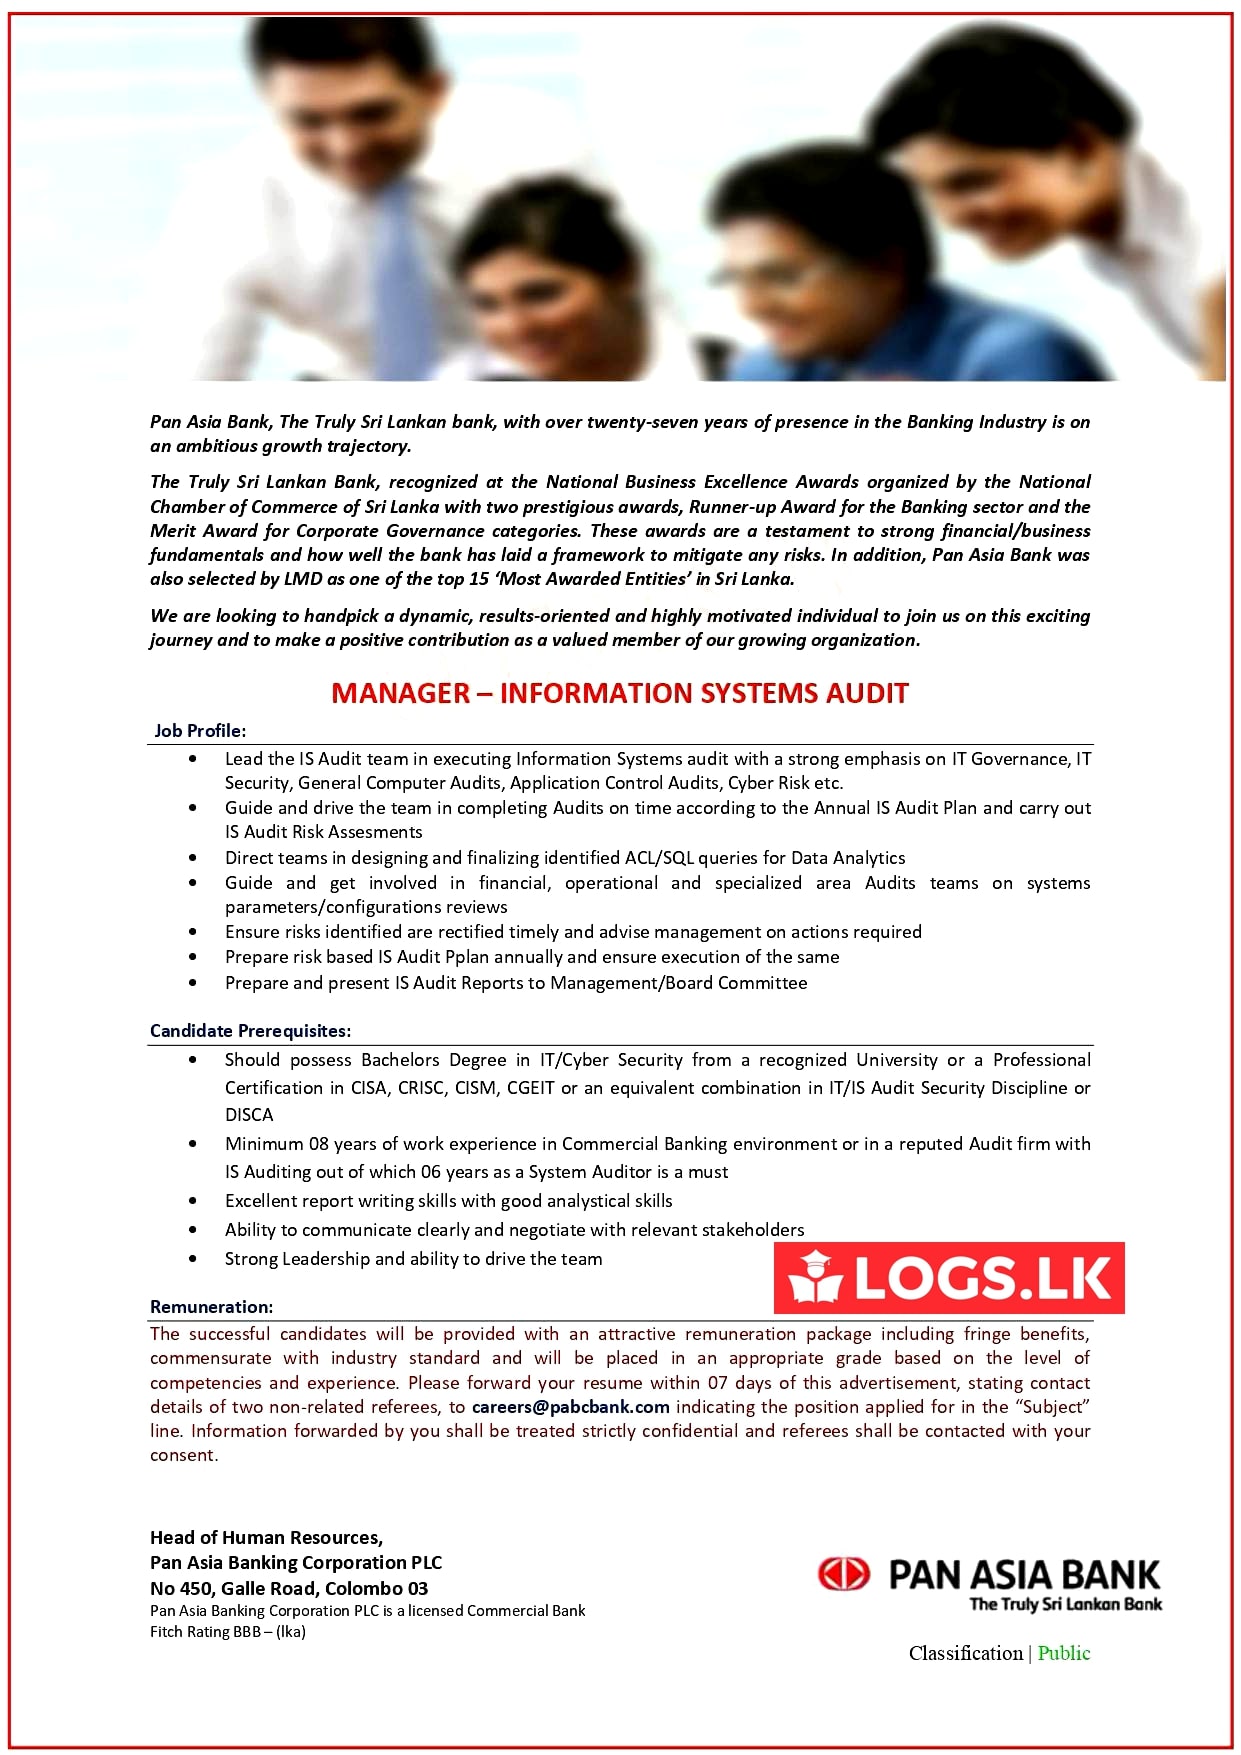 Manager (Information Systems Audit) Job Vacancy - Pan Asia Bank Jobs Vacancies